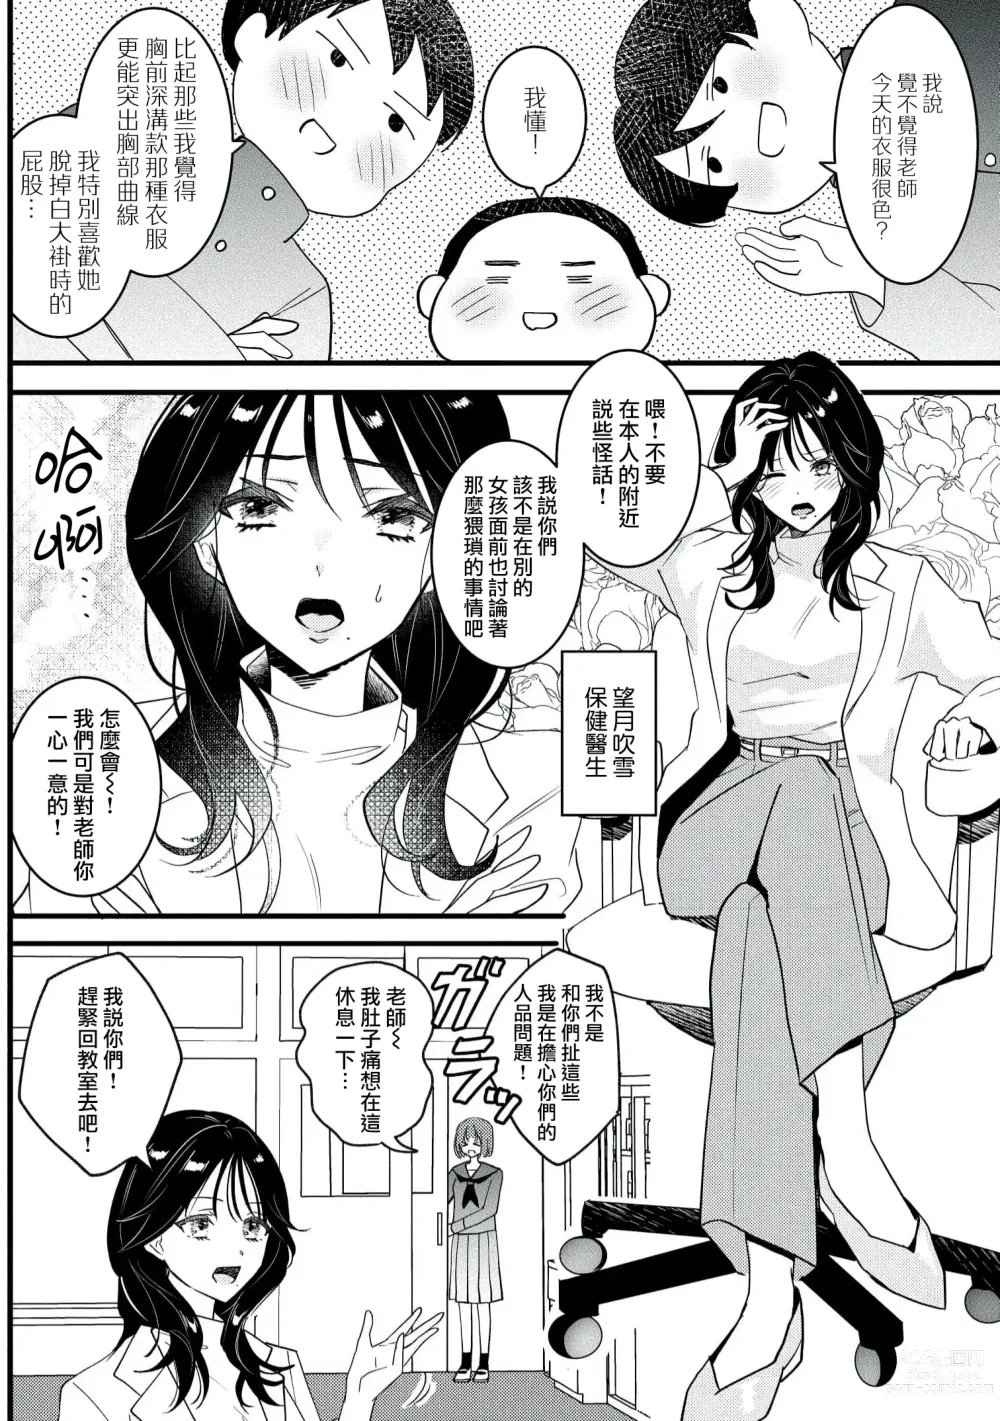 Page 7 of manga Dog or Teacher-放学后，老师们的调教恋爱- Class.1-3